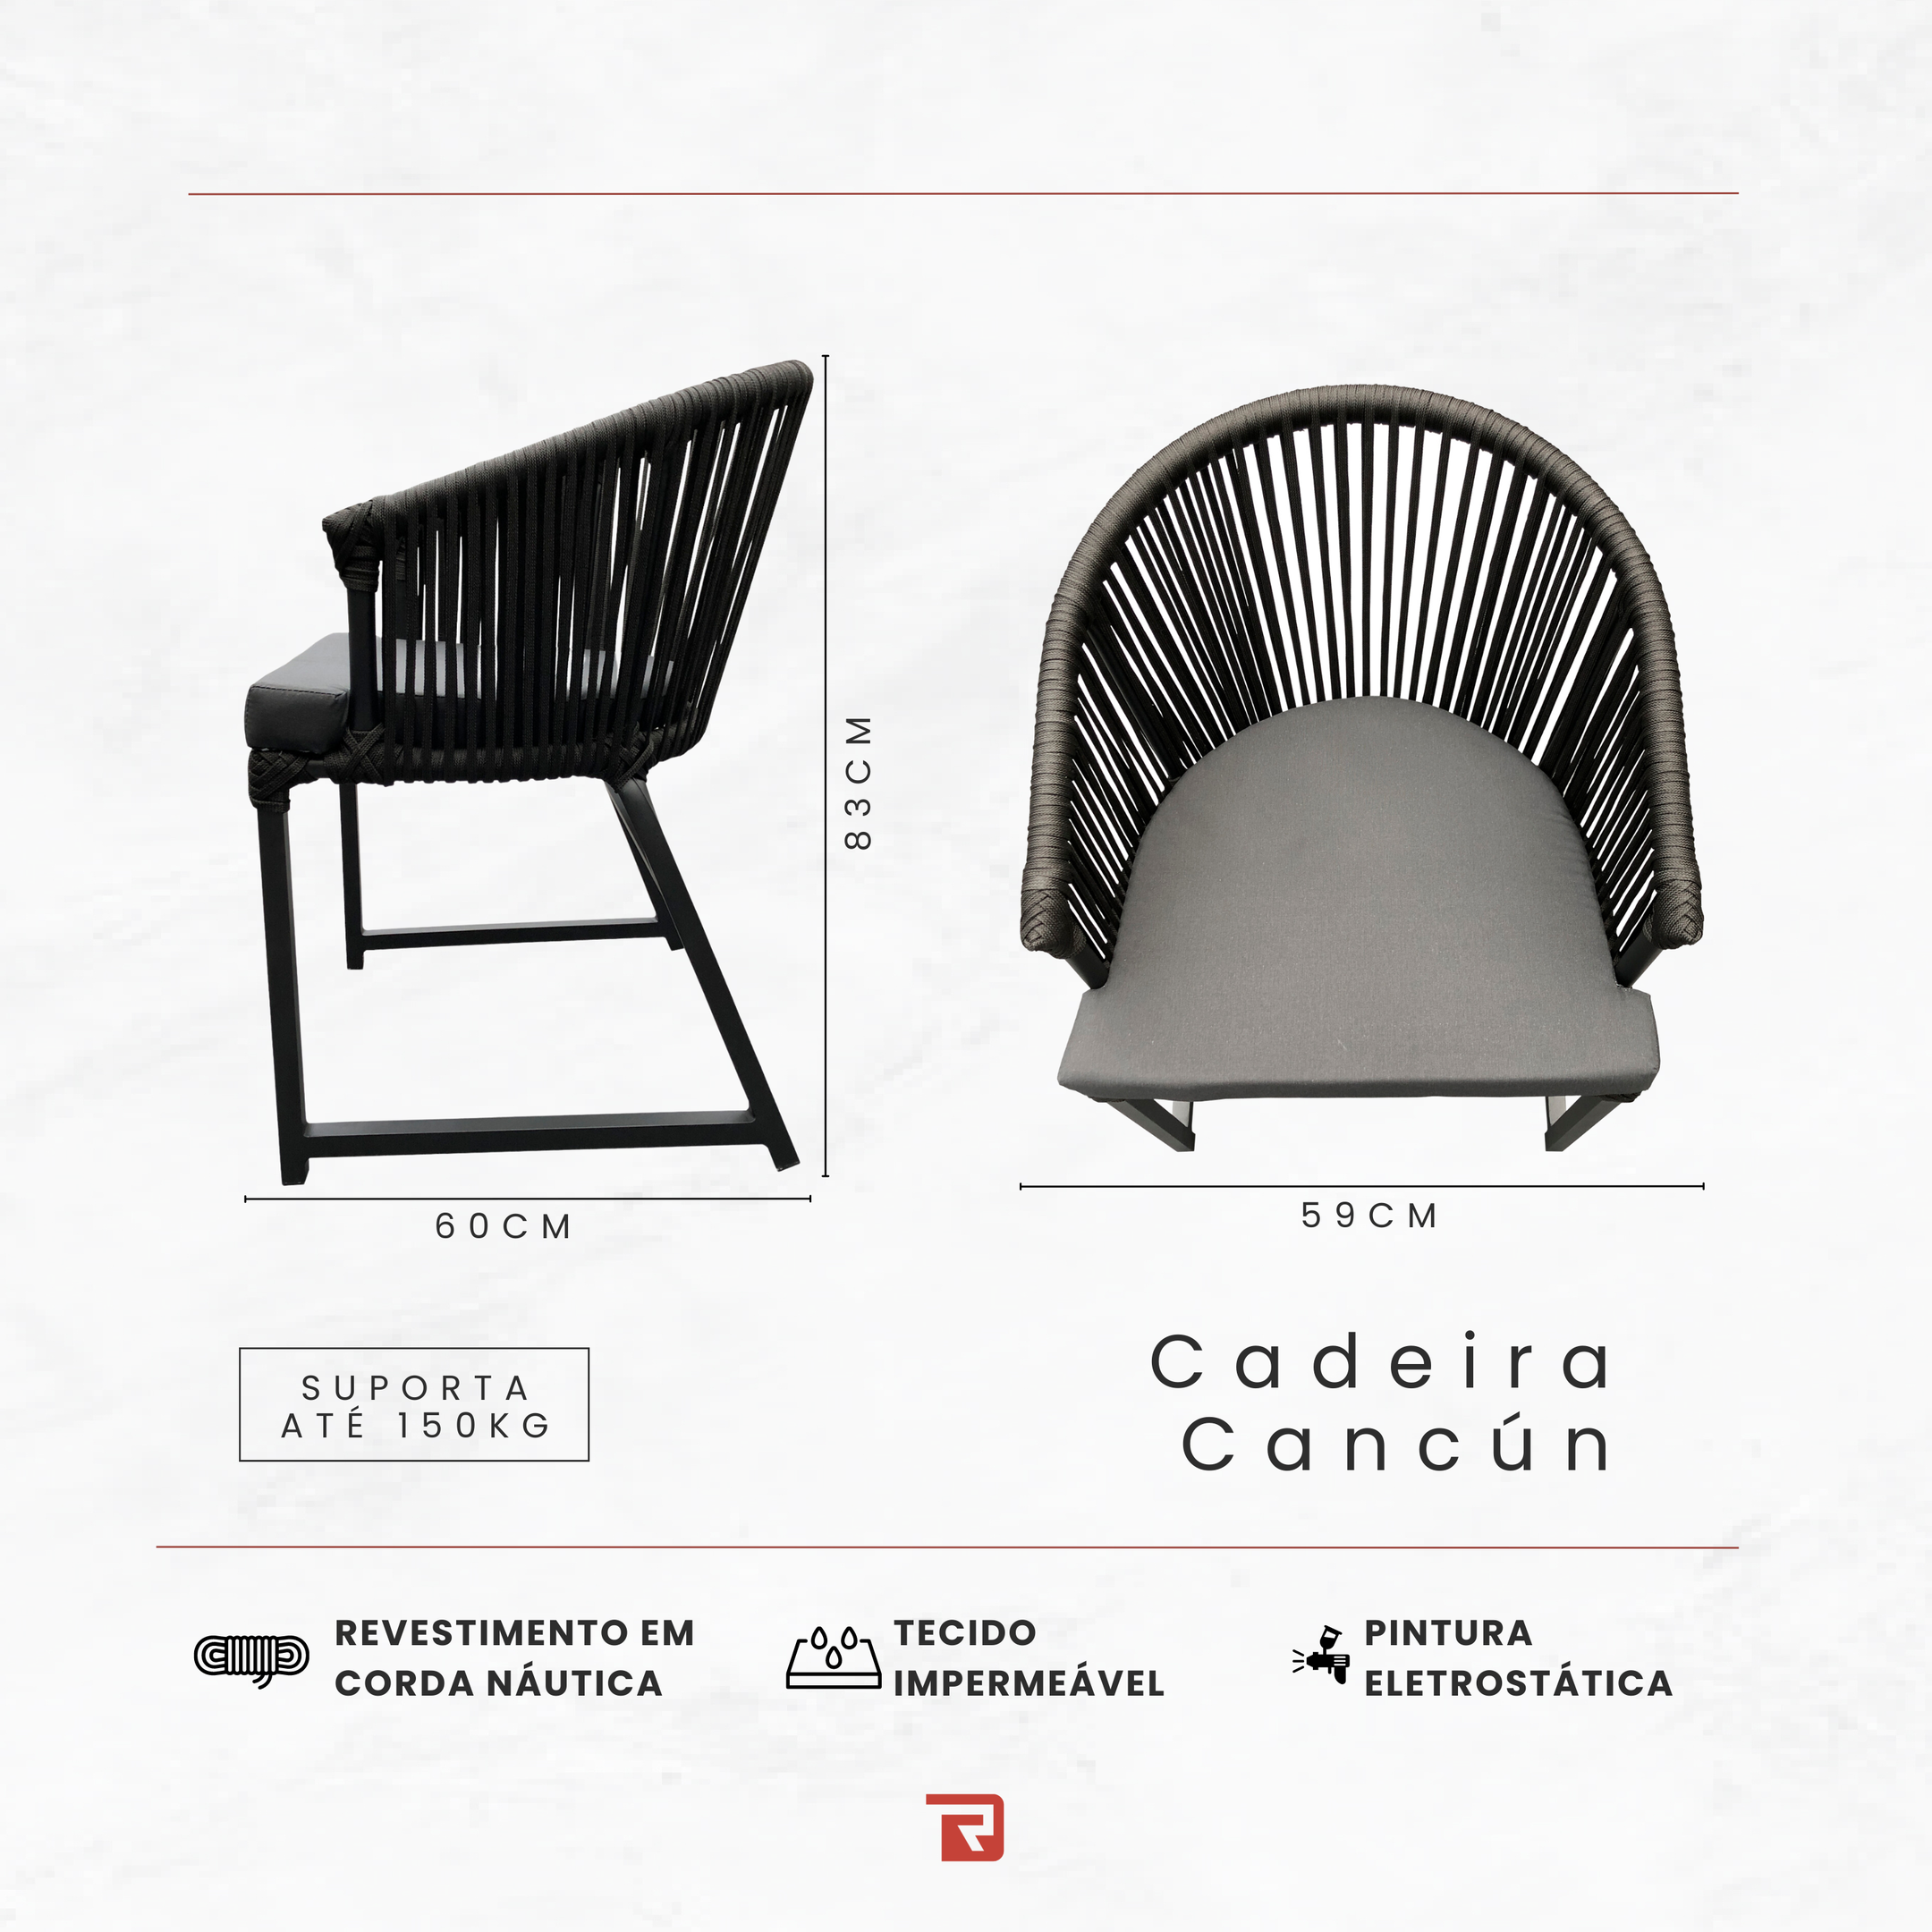 Cadeira Cancún - Alumínio Pintado Cor Preto, Corda Náutica, Jardim Varanda Área Externa - Preto - 6